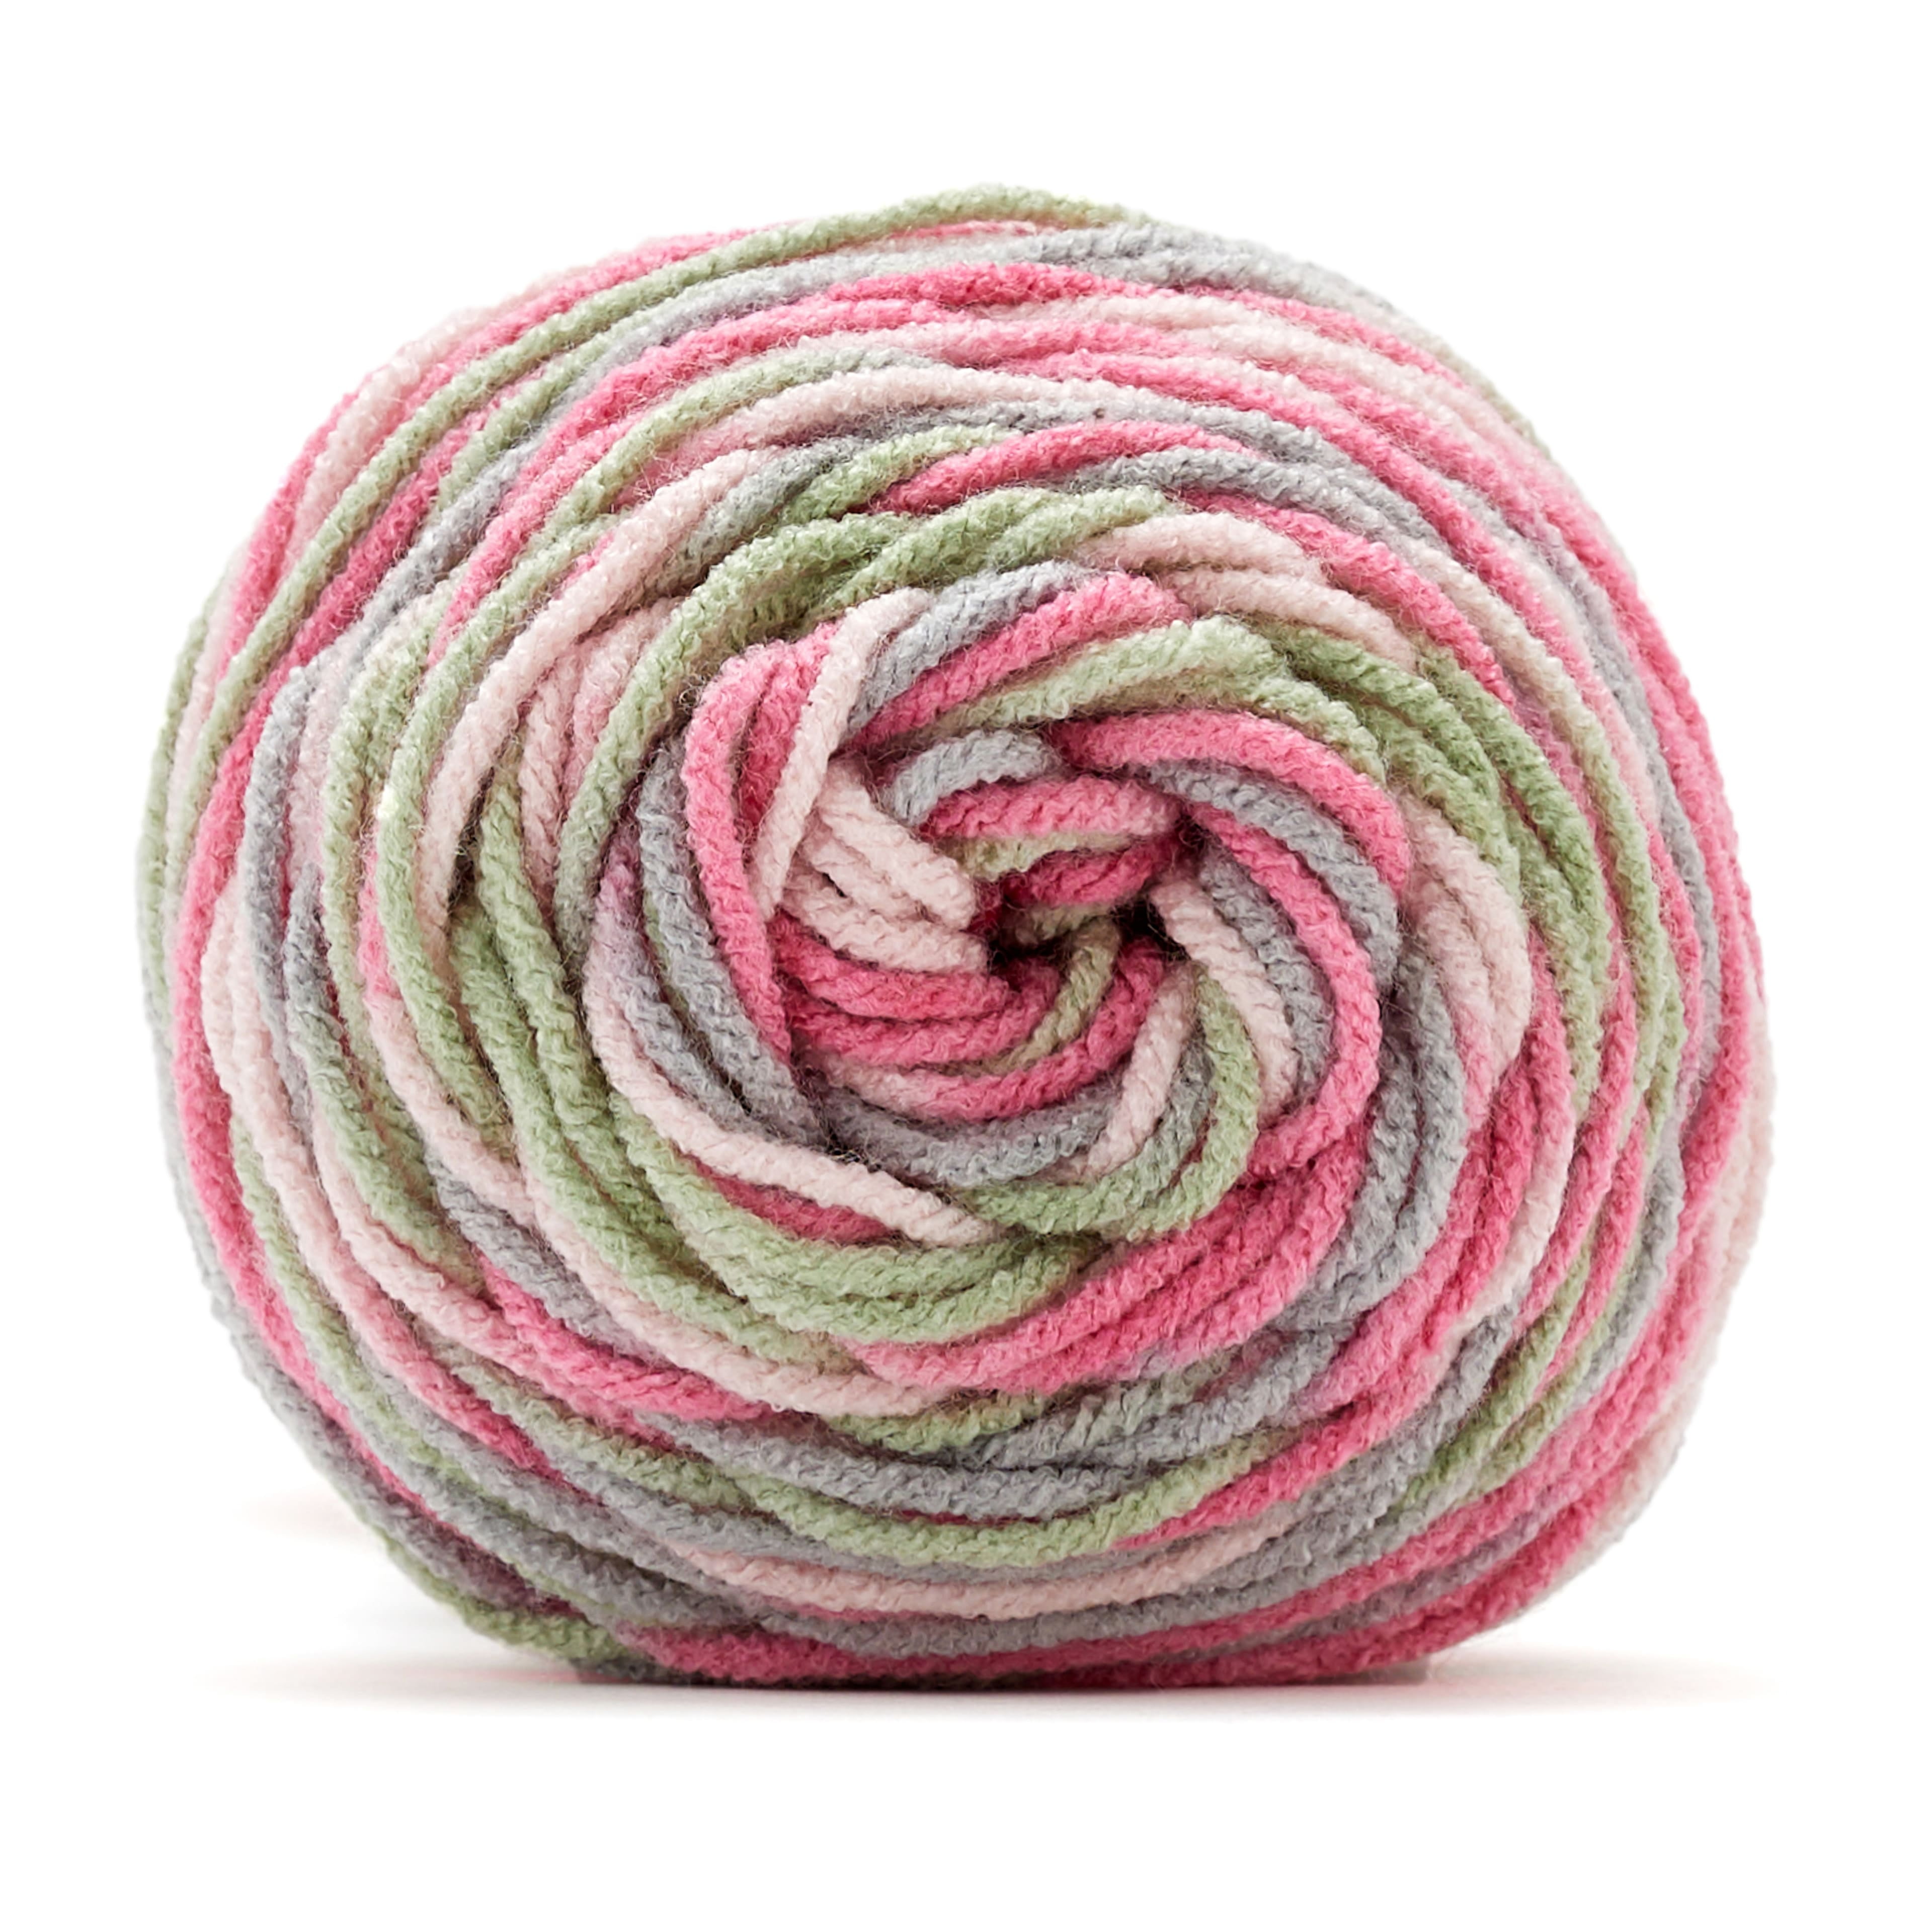 bright pink knitting and crocheting yarn from three fates yarns